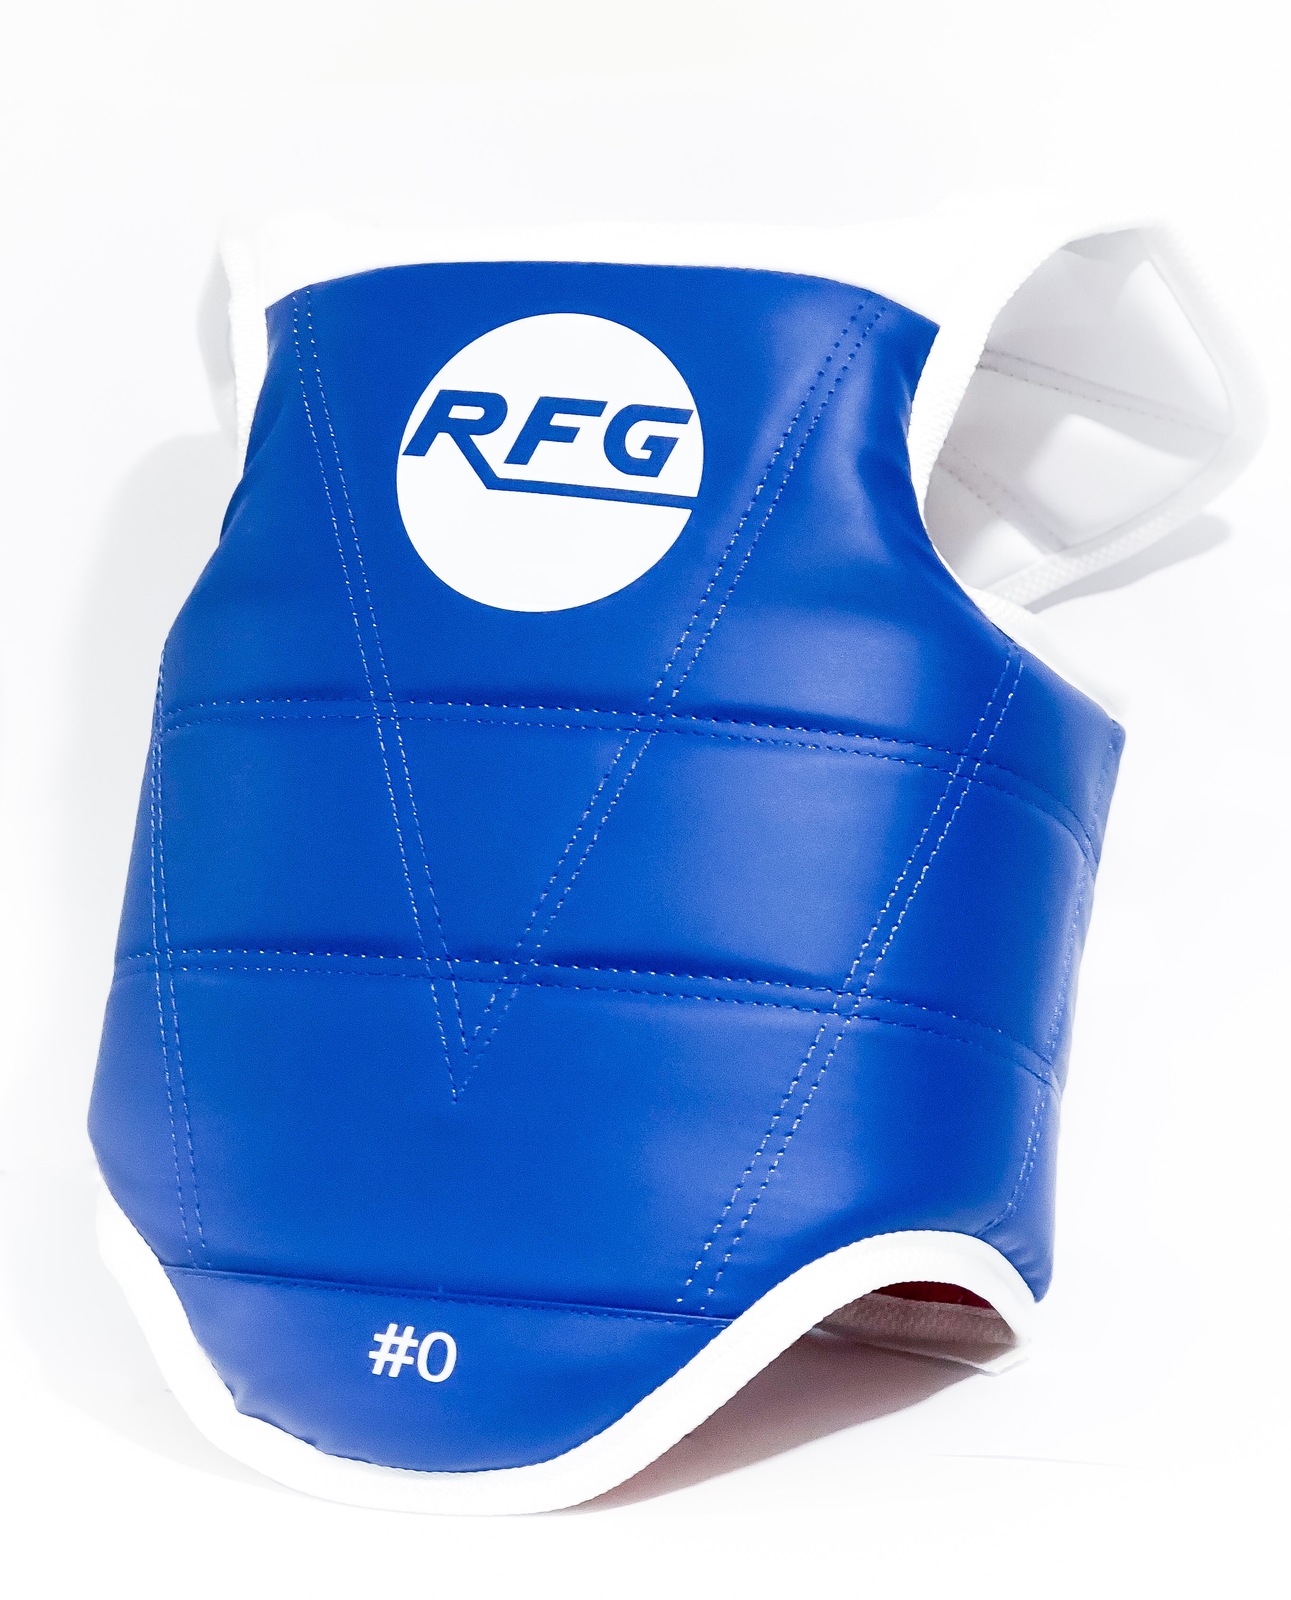 RFG - Reversible Taekwondo Chest Protector - Size 5